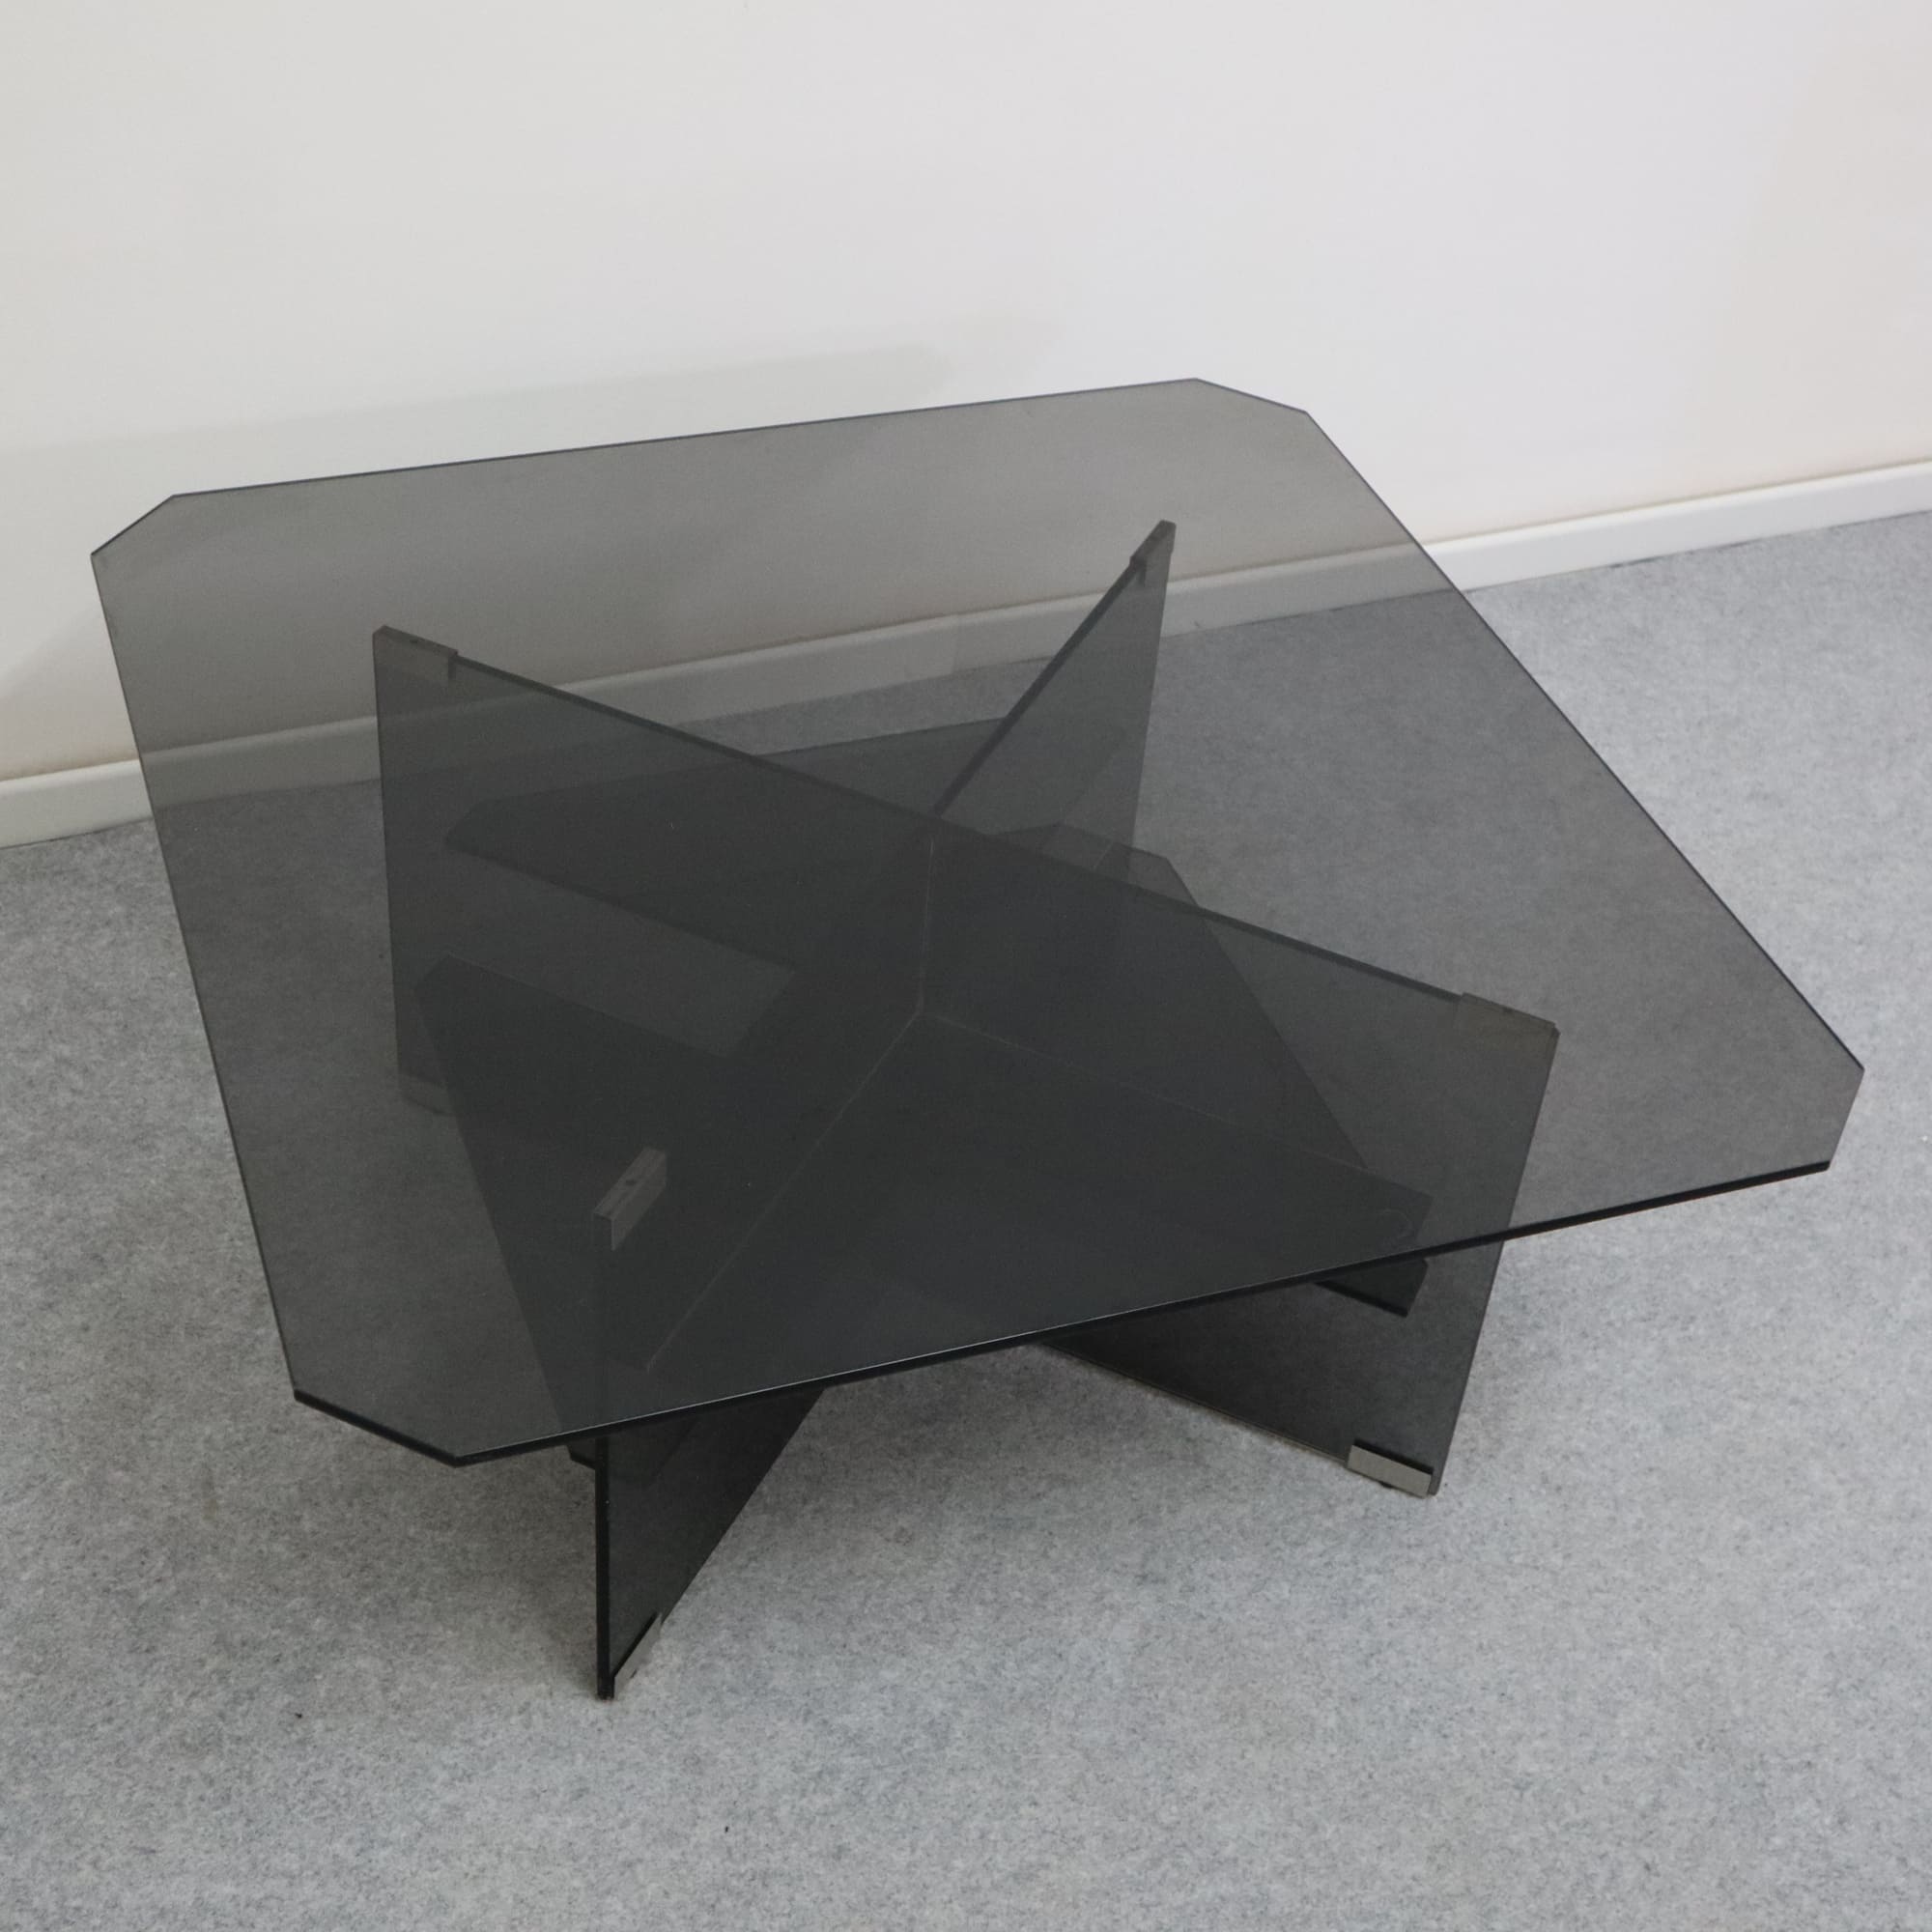 visionidepoca-visioni-depoca-small-table-smoked-glass-70s-gallotti-radice-furniture-design-vintage-made-italy-2